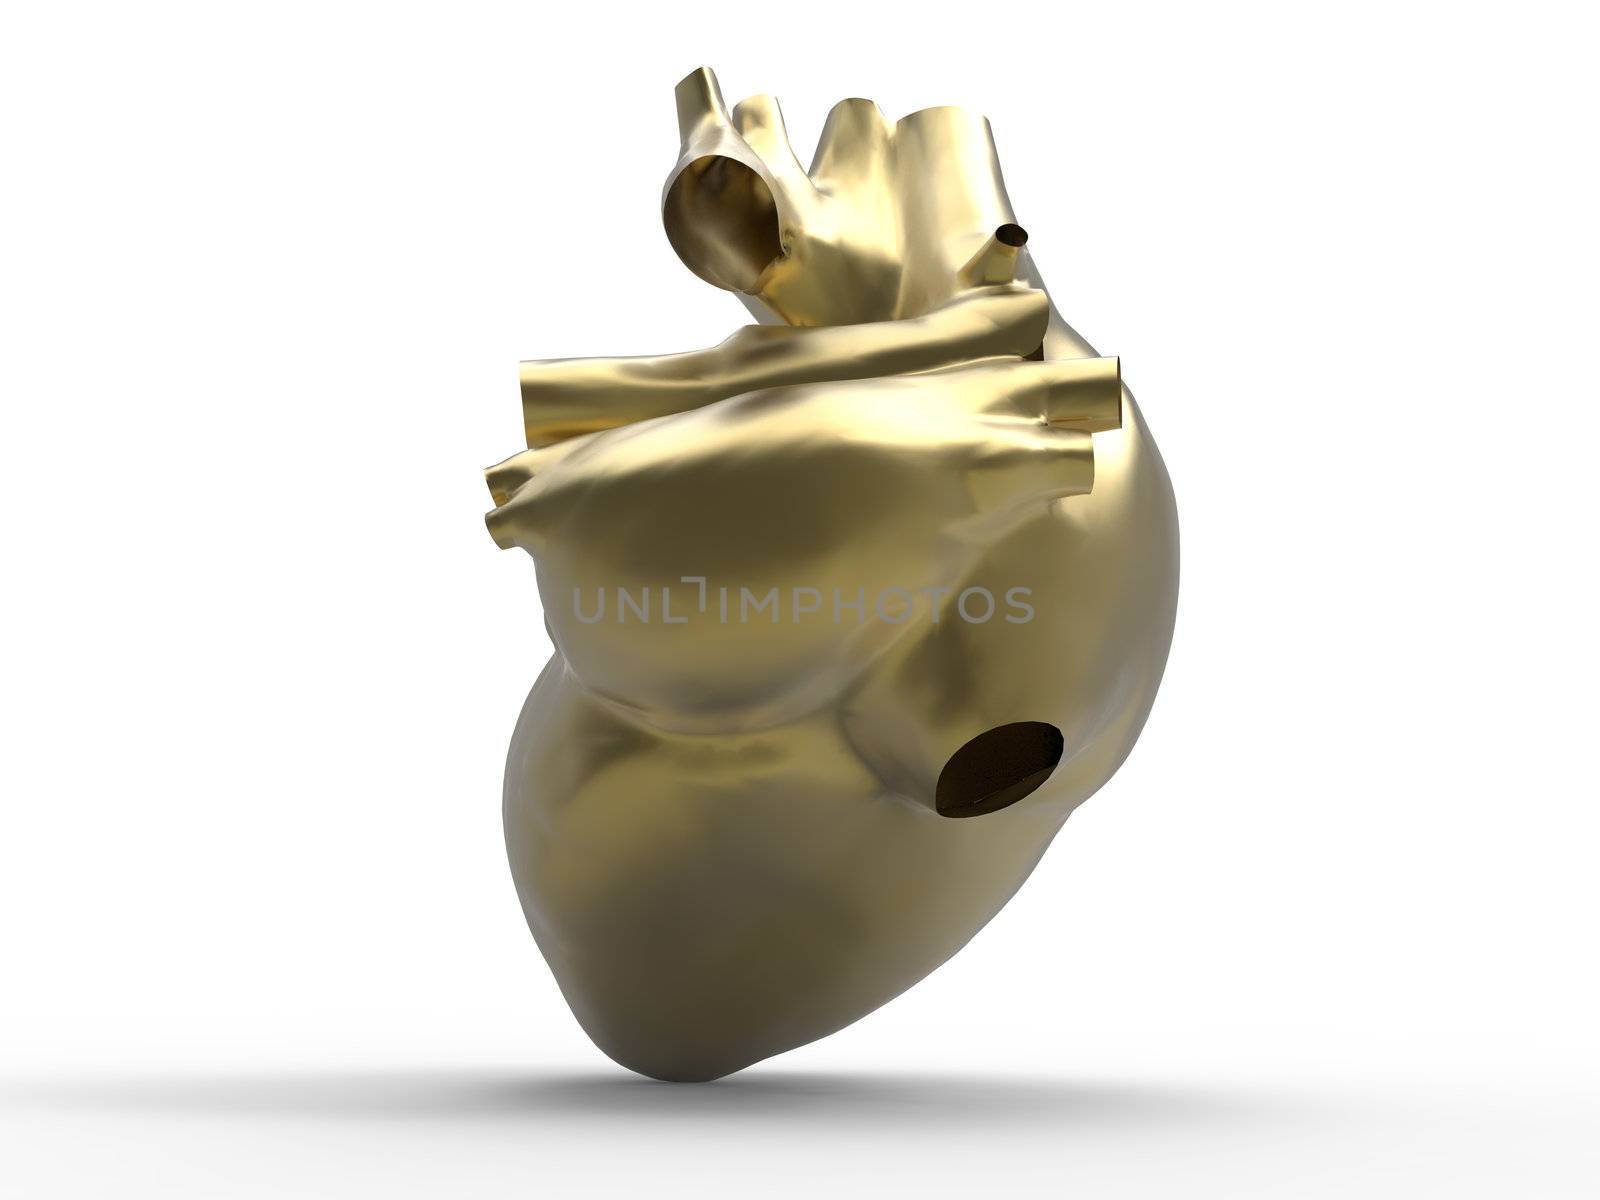 Model of human heart - heart of gold